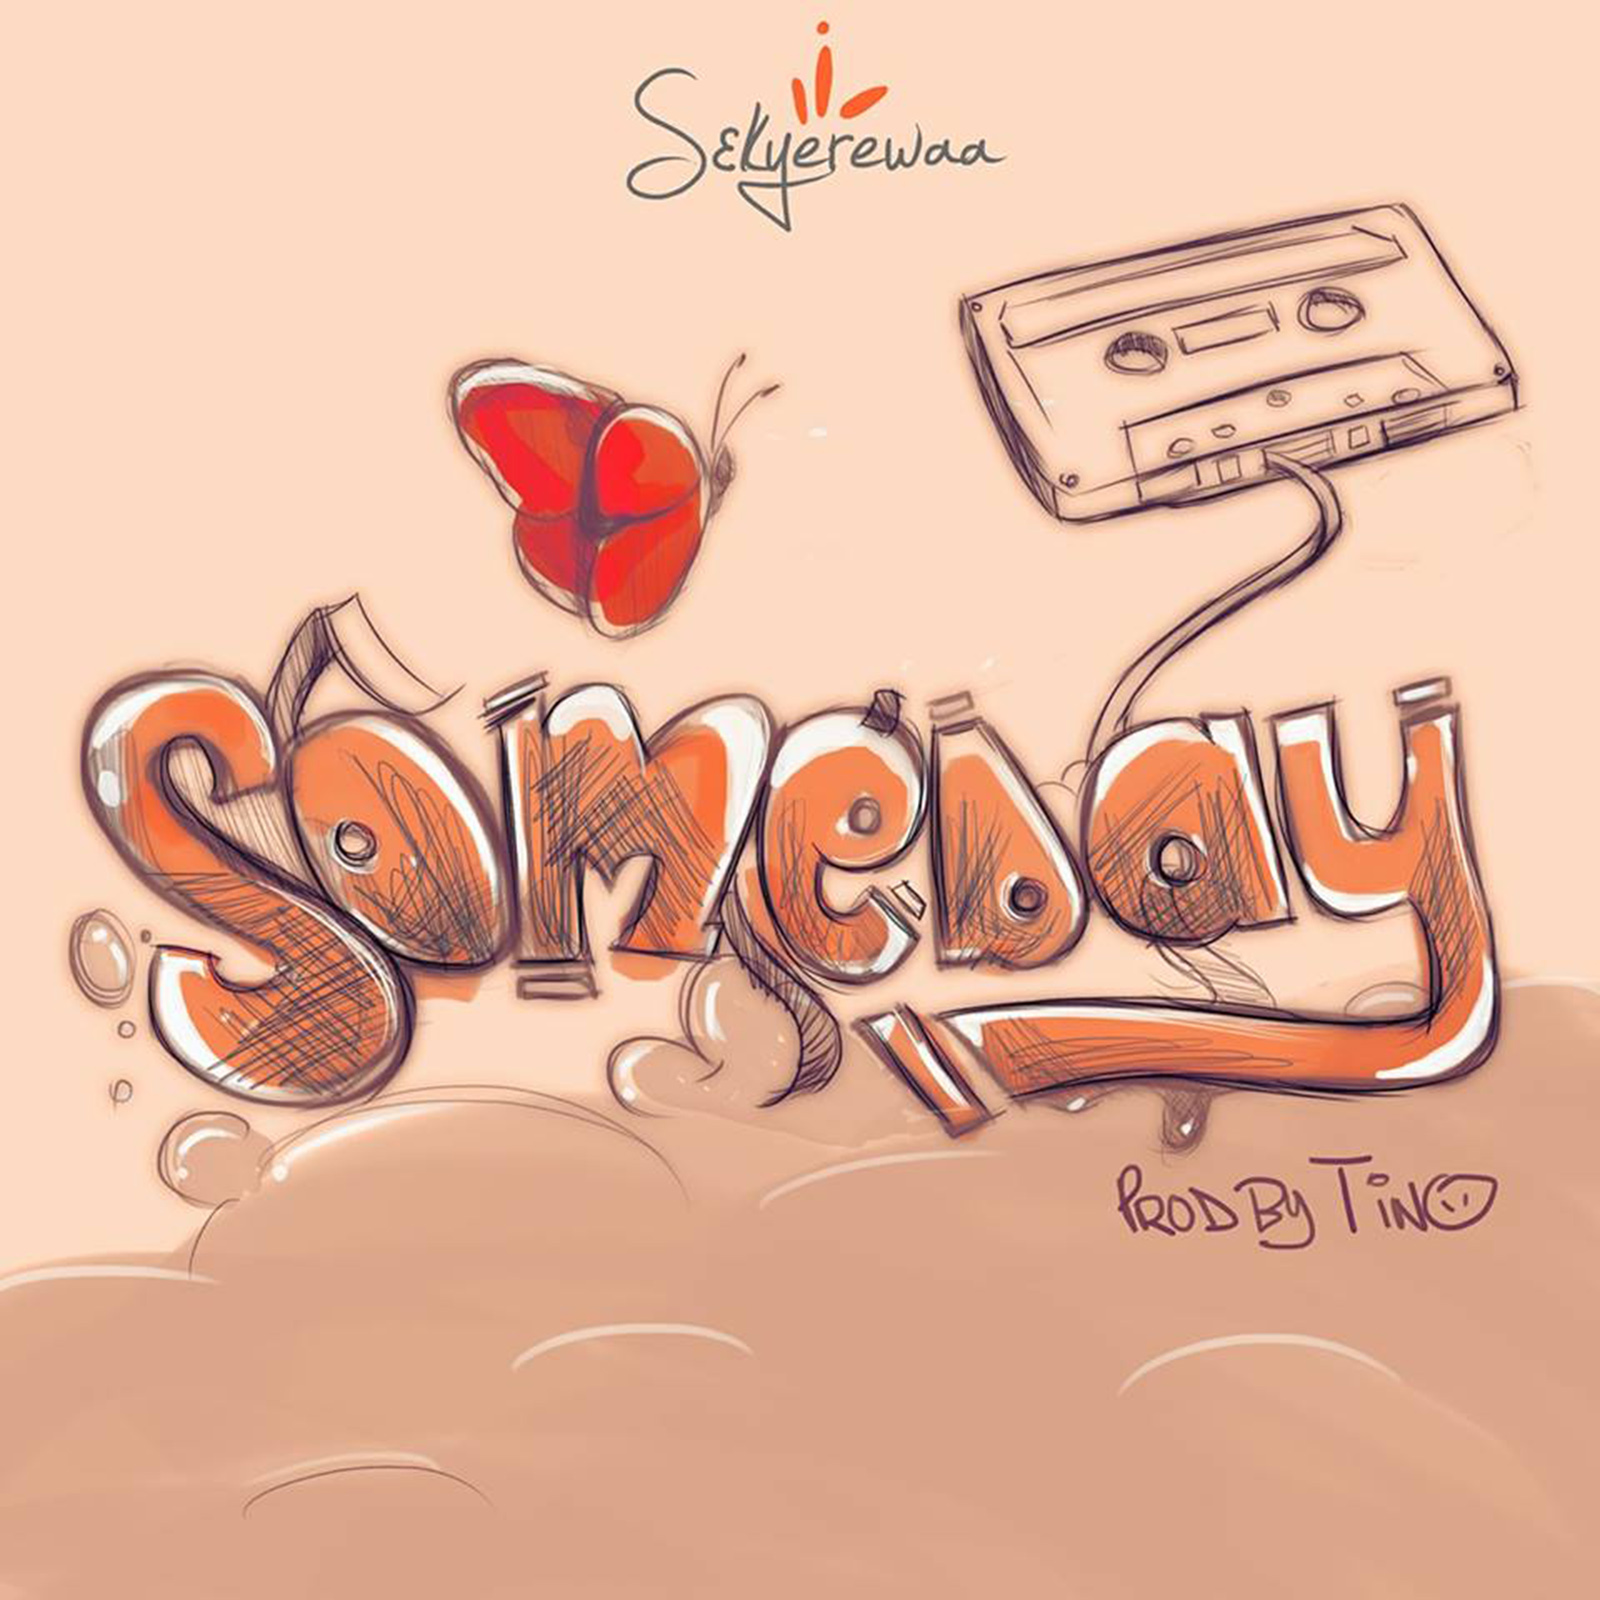 Someday by Sεkyerewaa